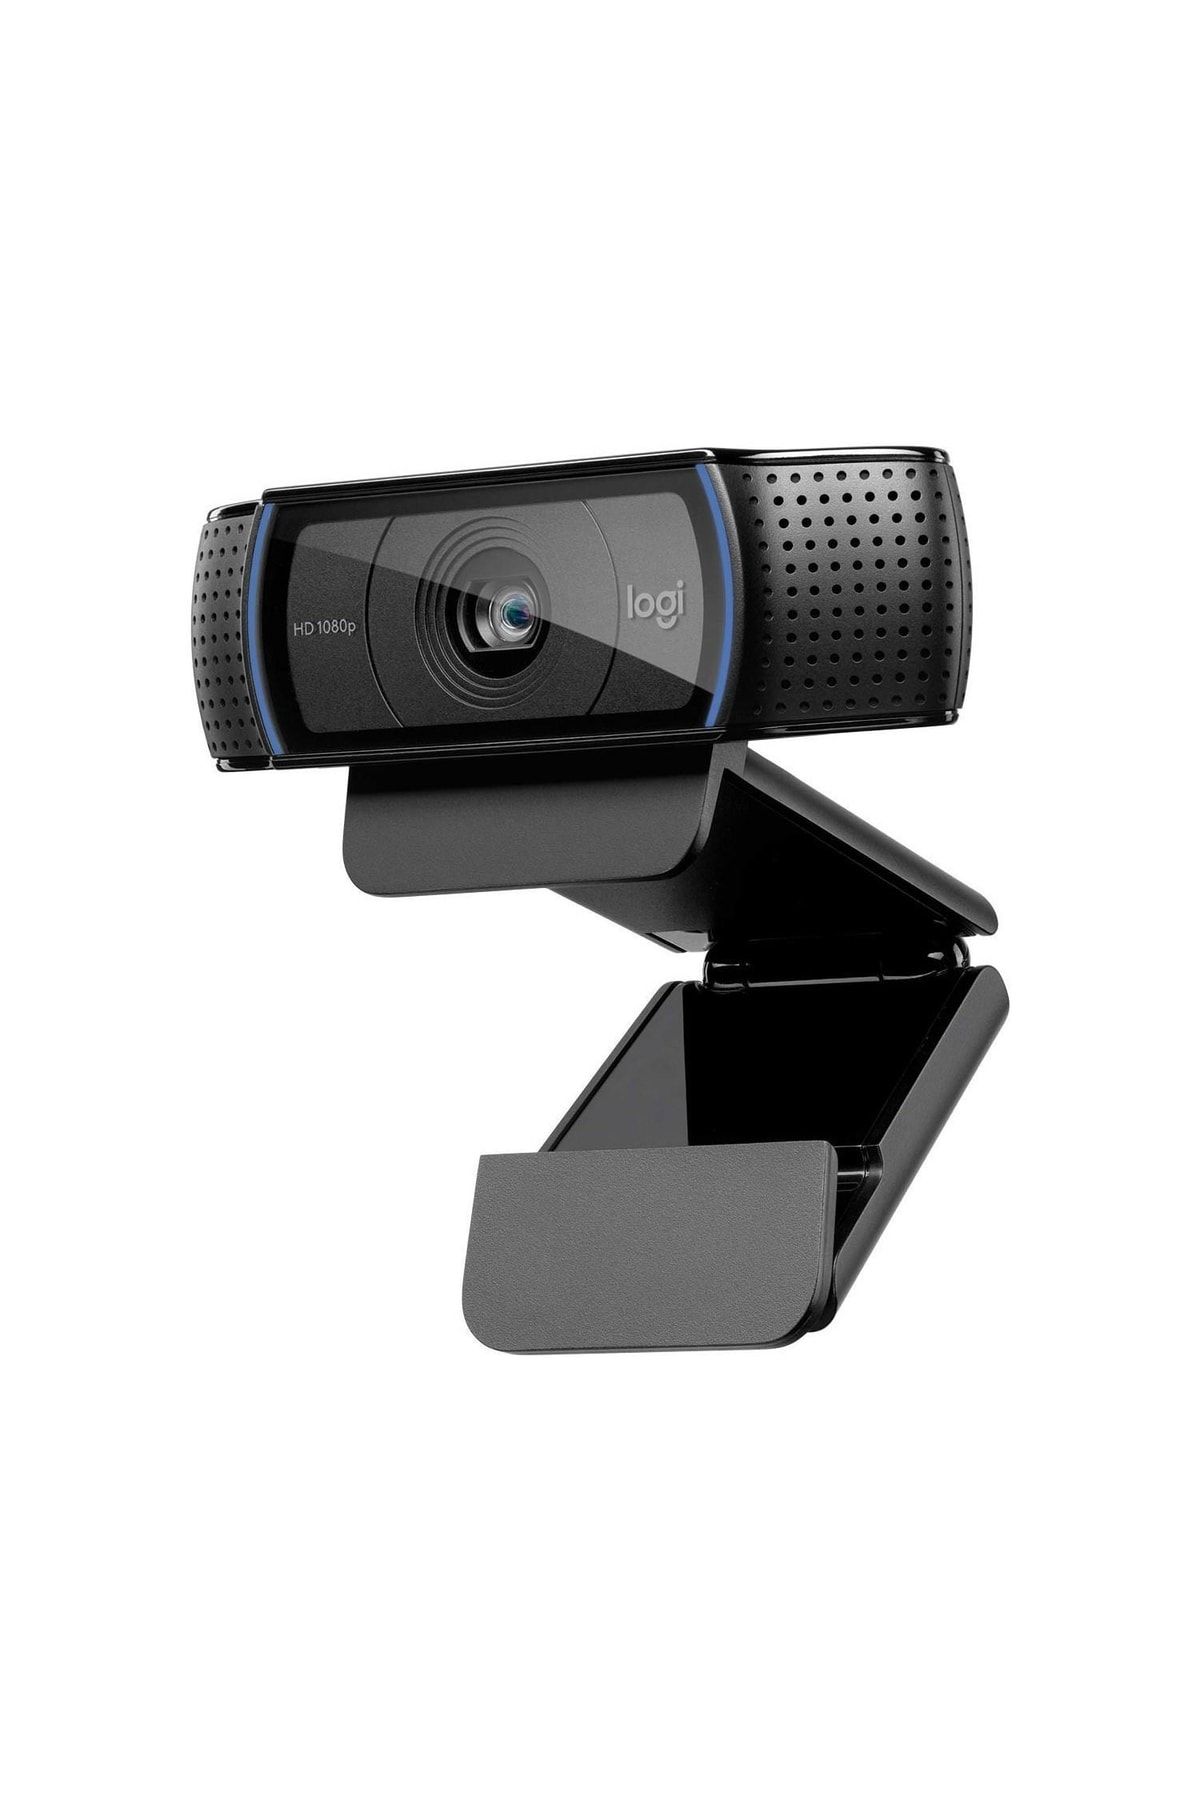 OEM Logitech Pro Hd 1080p Stereo Ses Ile Web Kamerası - Siyah 1080p/30 Fps - 720p/30 Fps